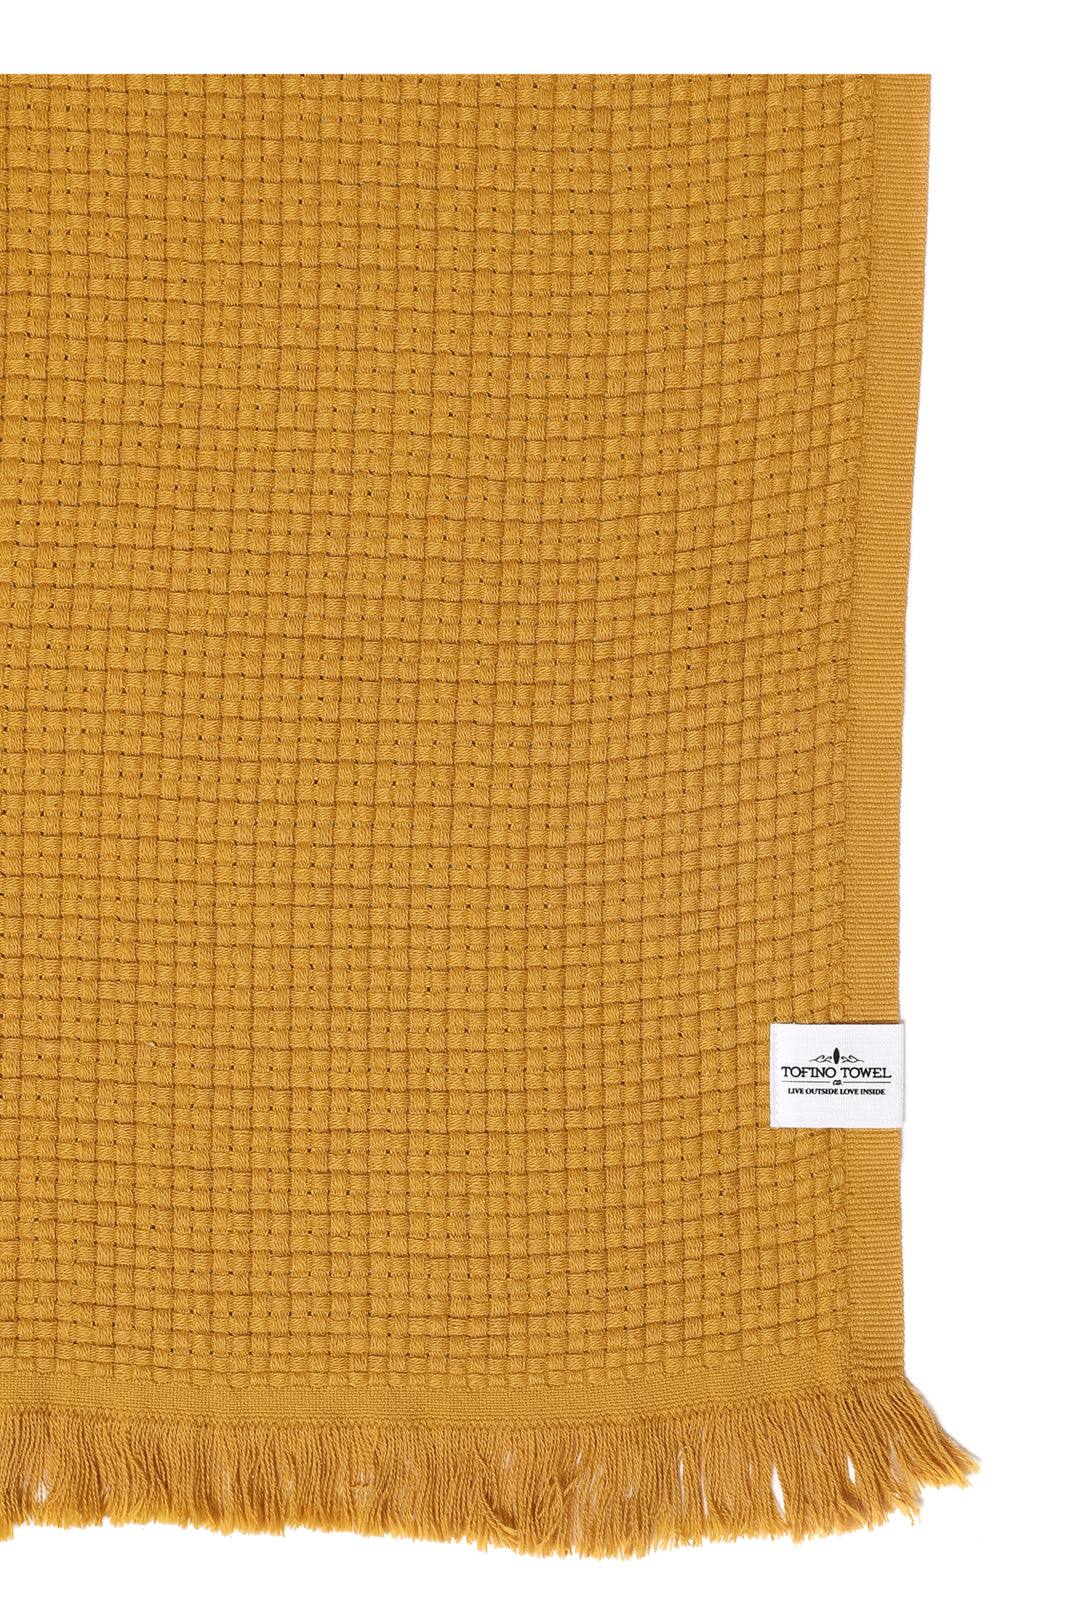 Tofino Towel Nala Throw Blanket | Gold & Sand